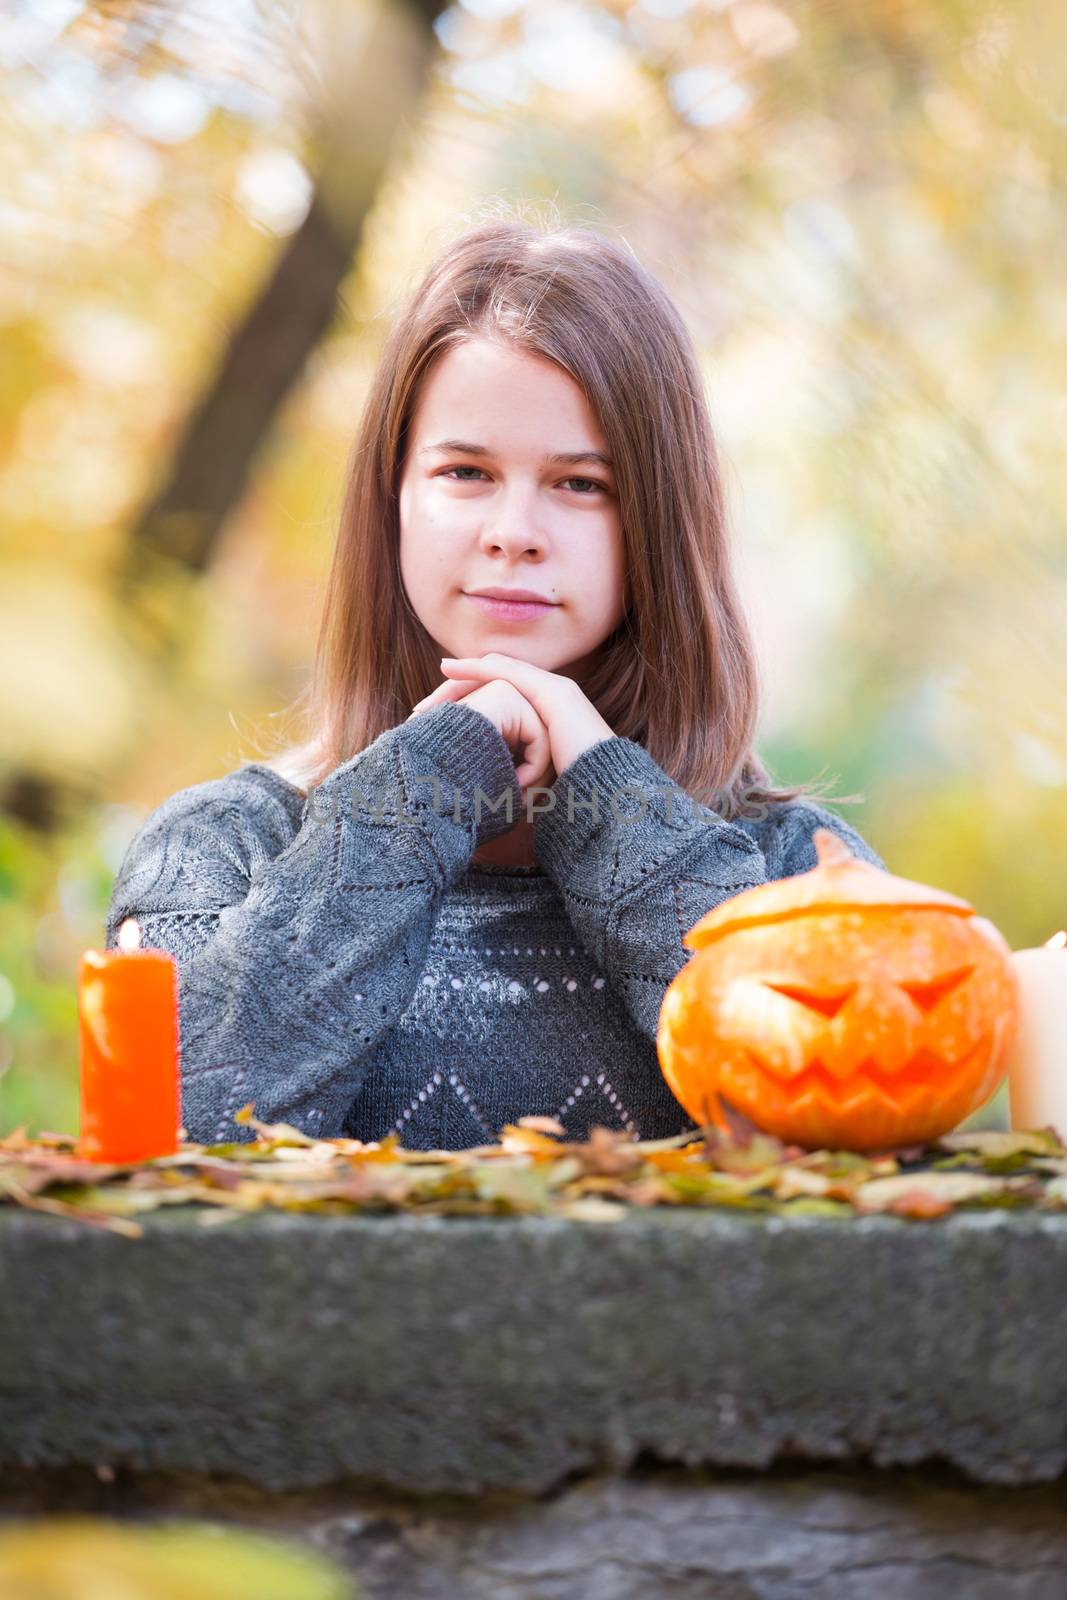 Girls with pumpkins on Halloween by destillat